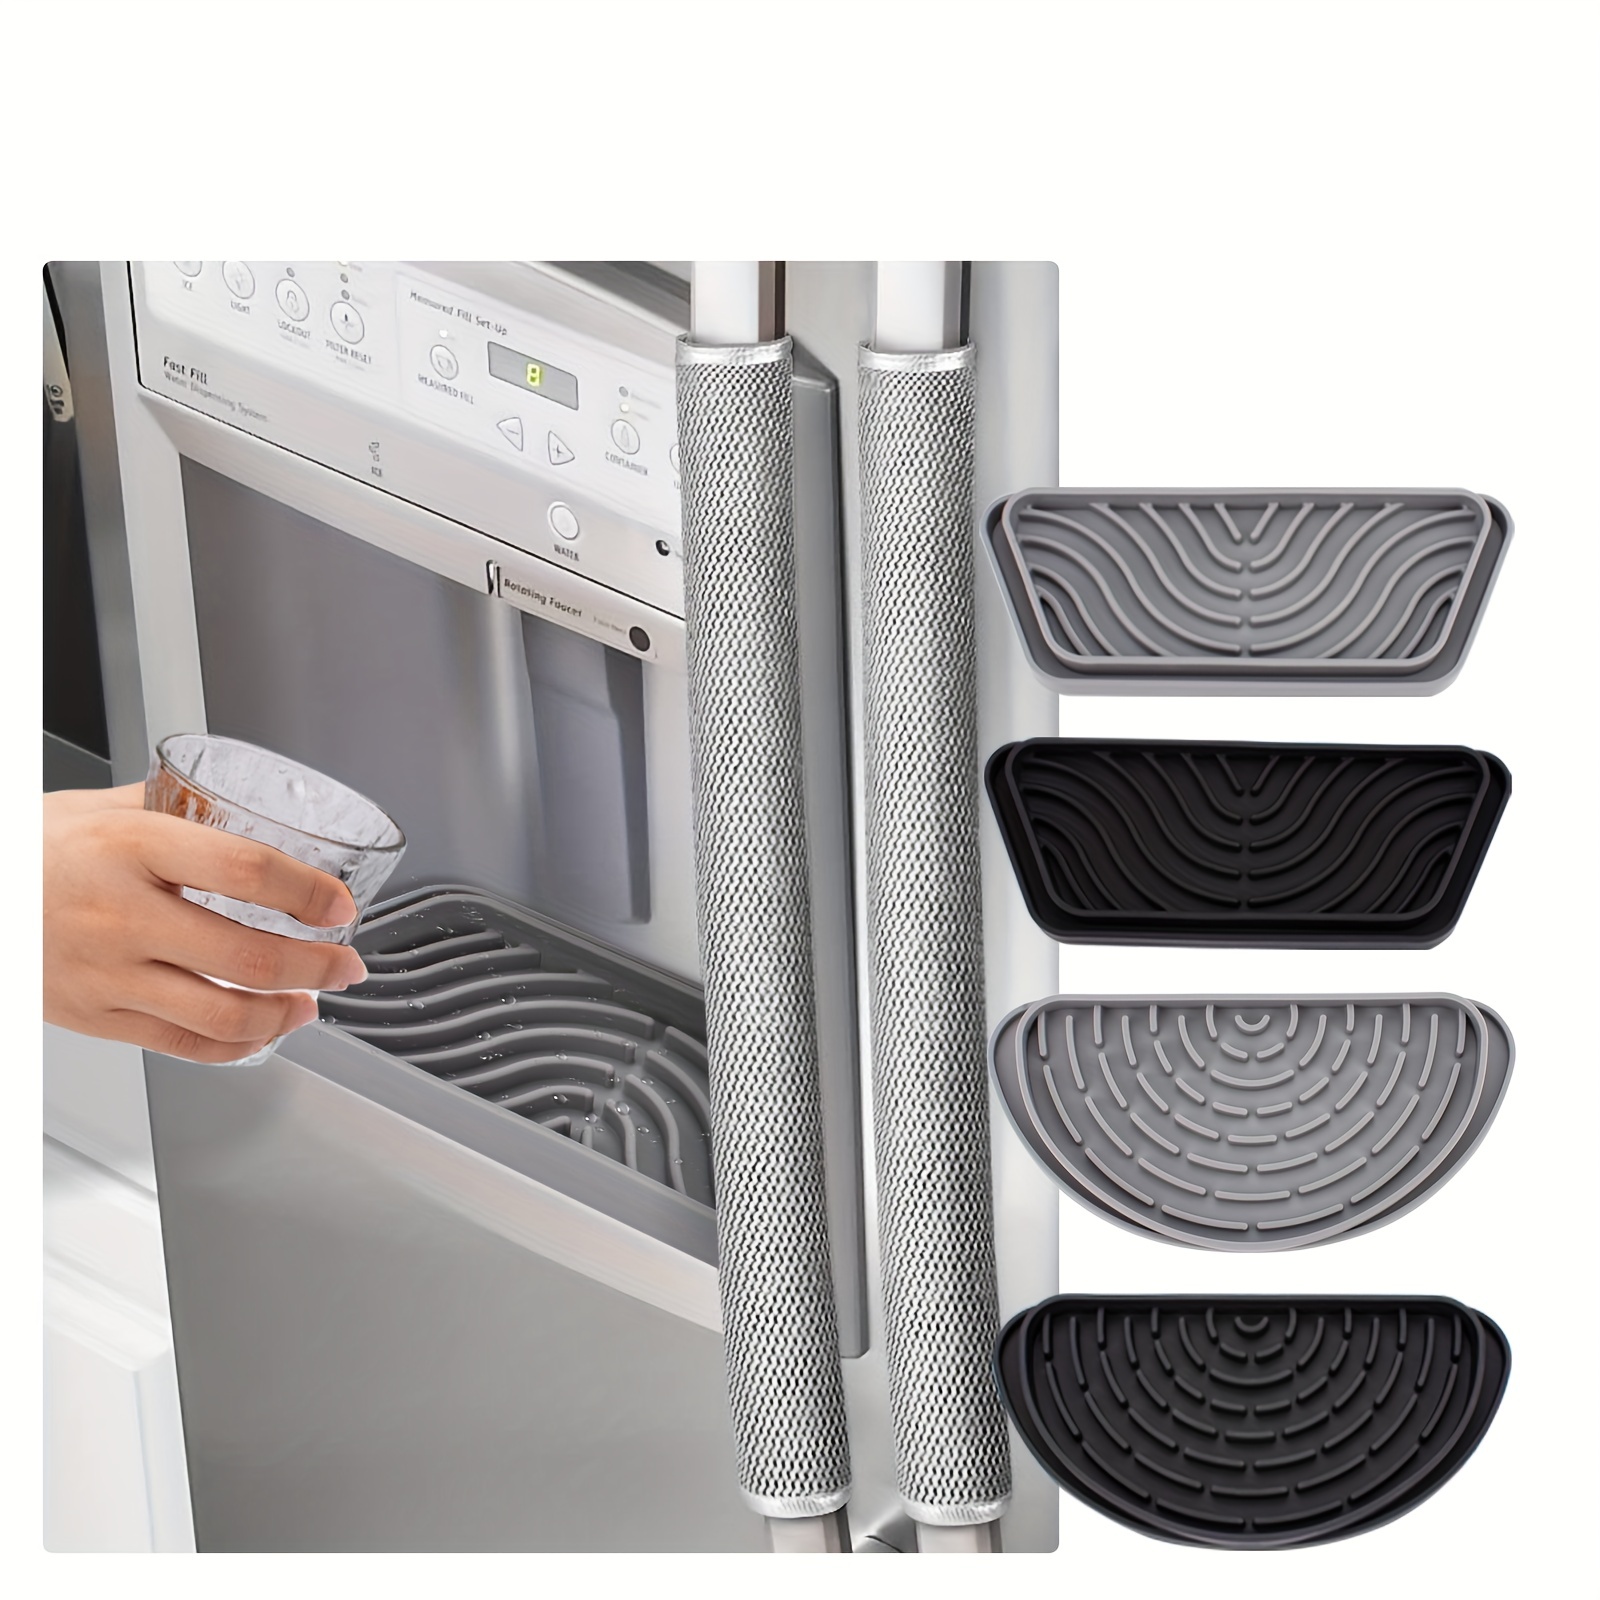 Refrigerator Water Dispenser Drip Tray Silicone Splash Guard Fridge Water Drip Catcher Collector Pan Pad Mat Home Kitchen Supplies, Size: B, Gray